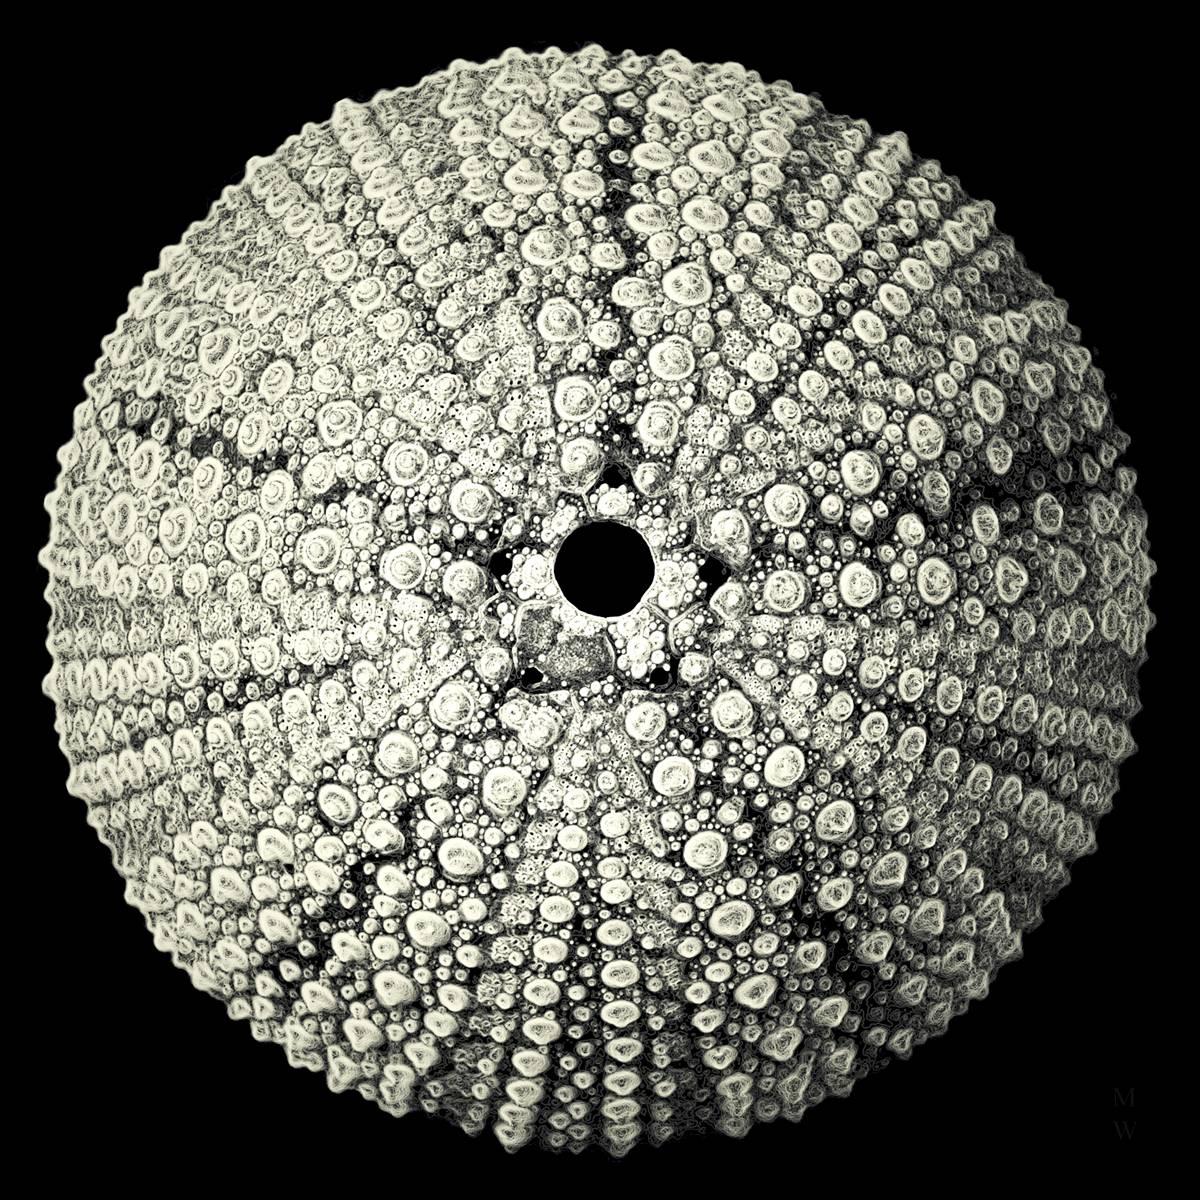 Mary Woodman Black and White Photograph - Urchin